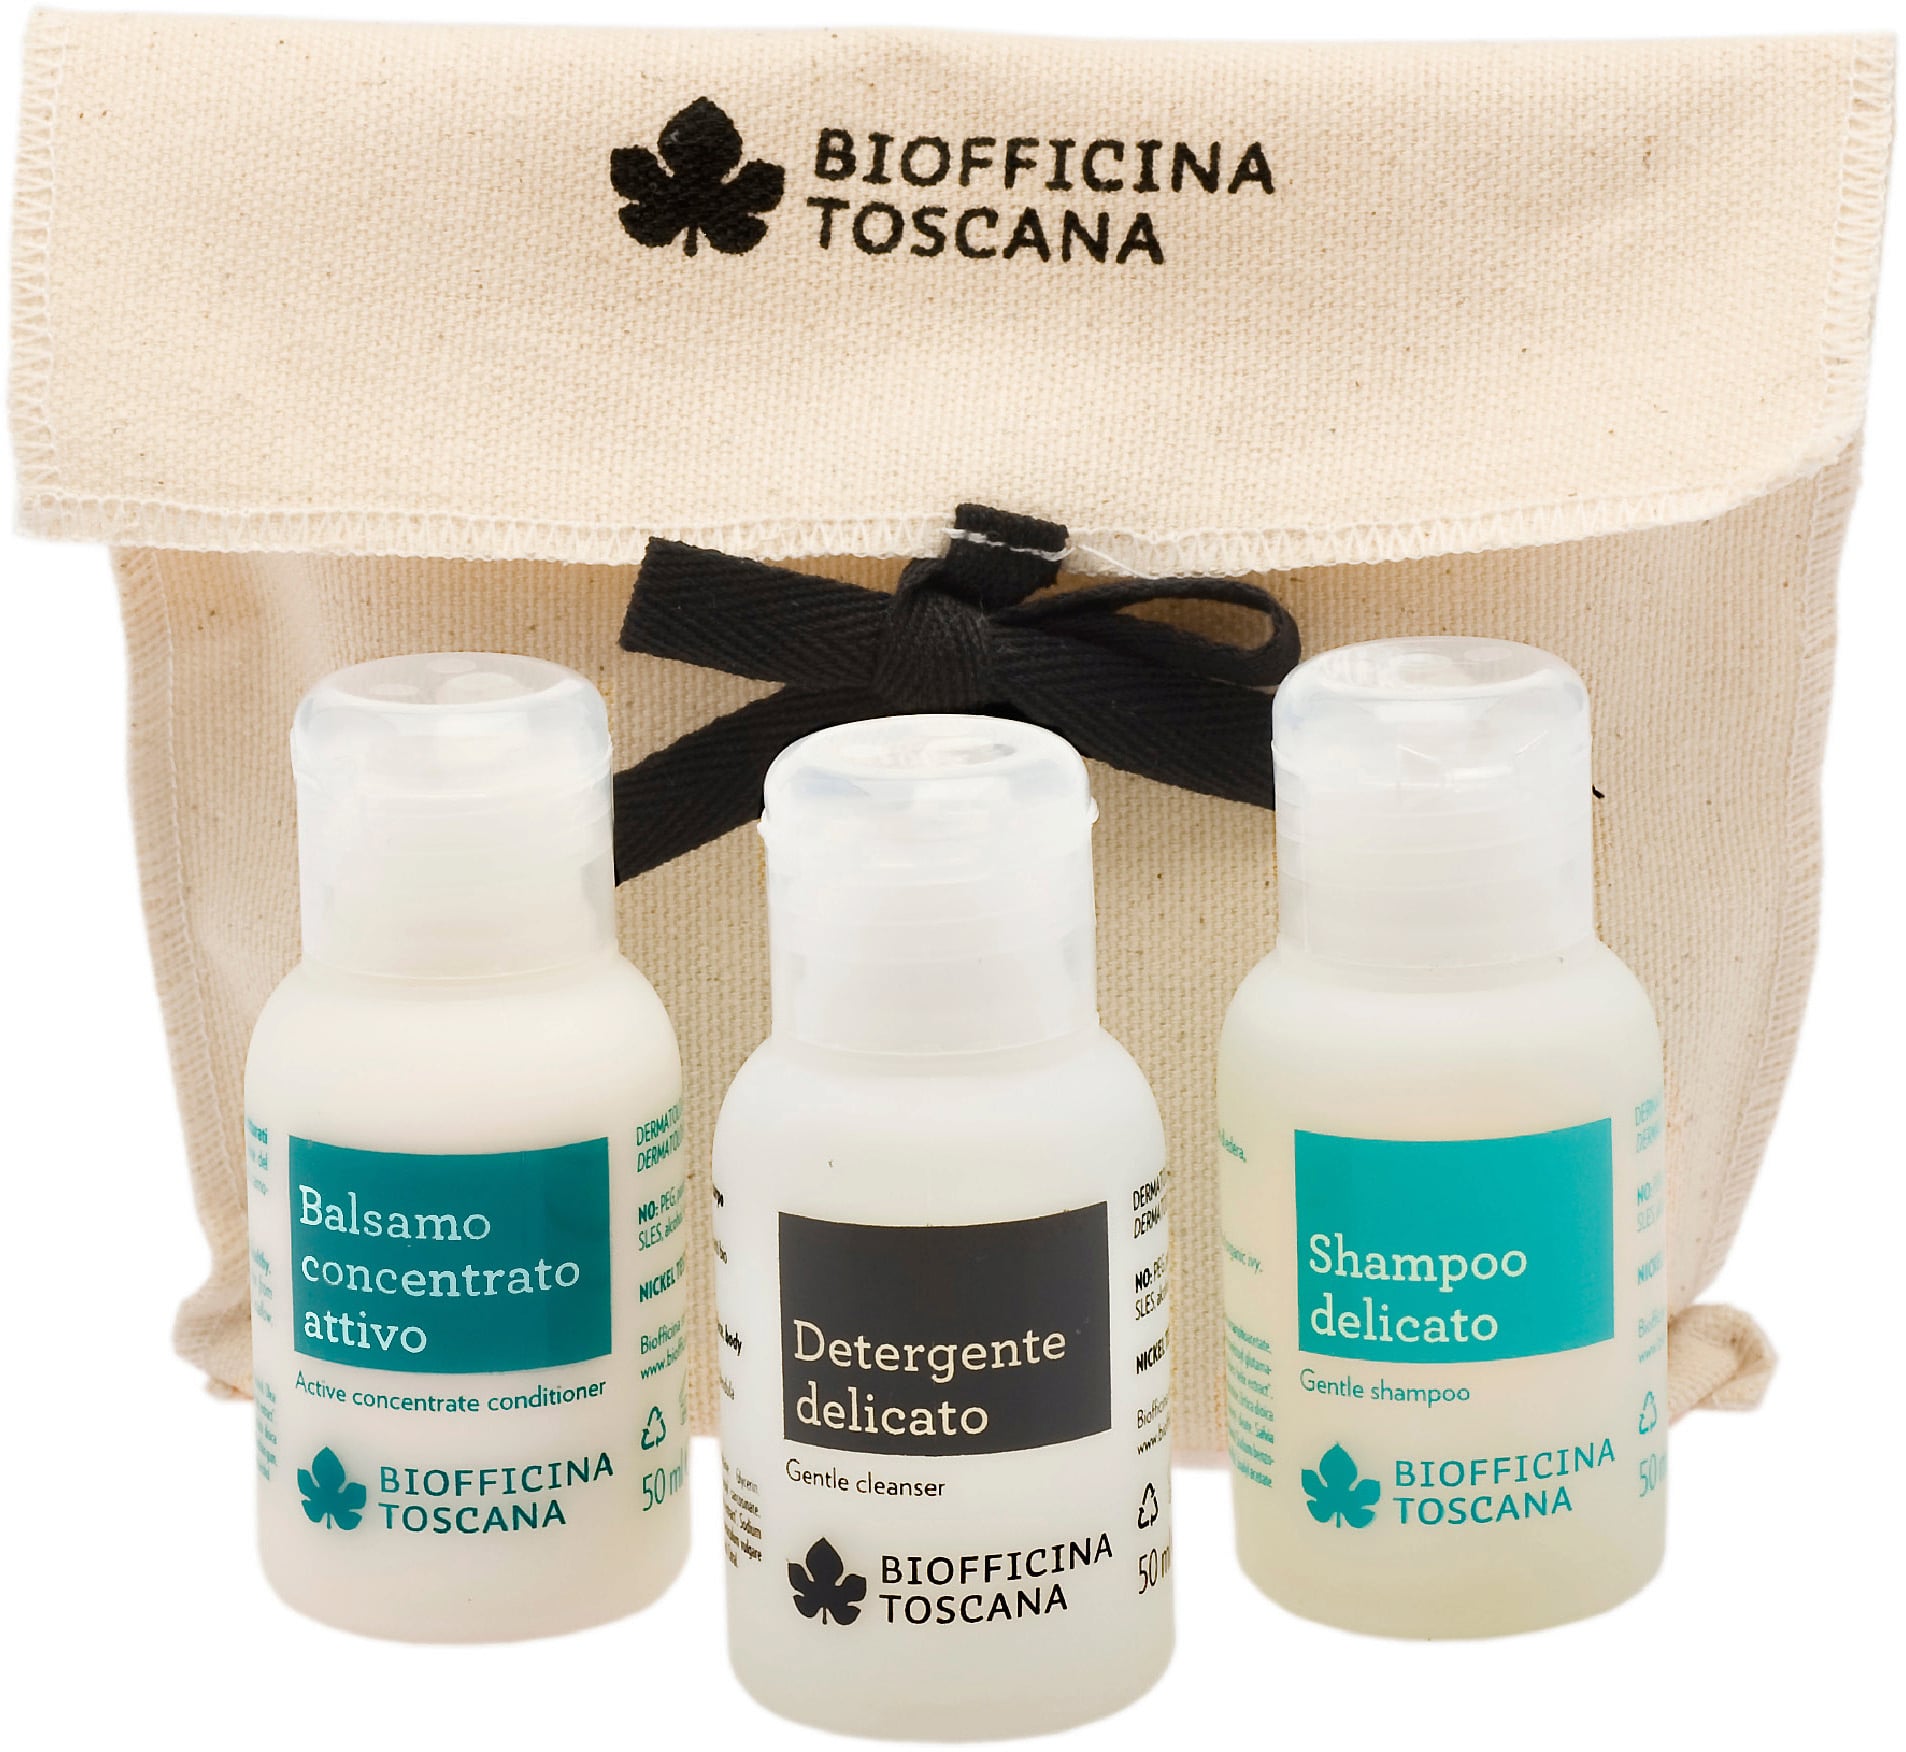 Biofficina Toscana Tuscan Travel Kit